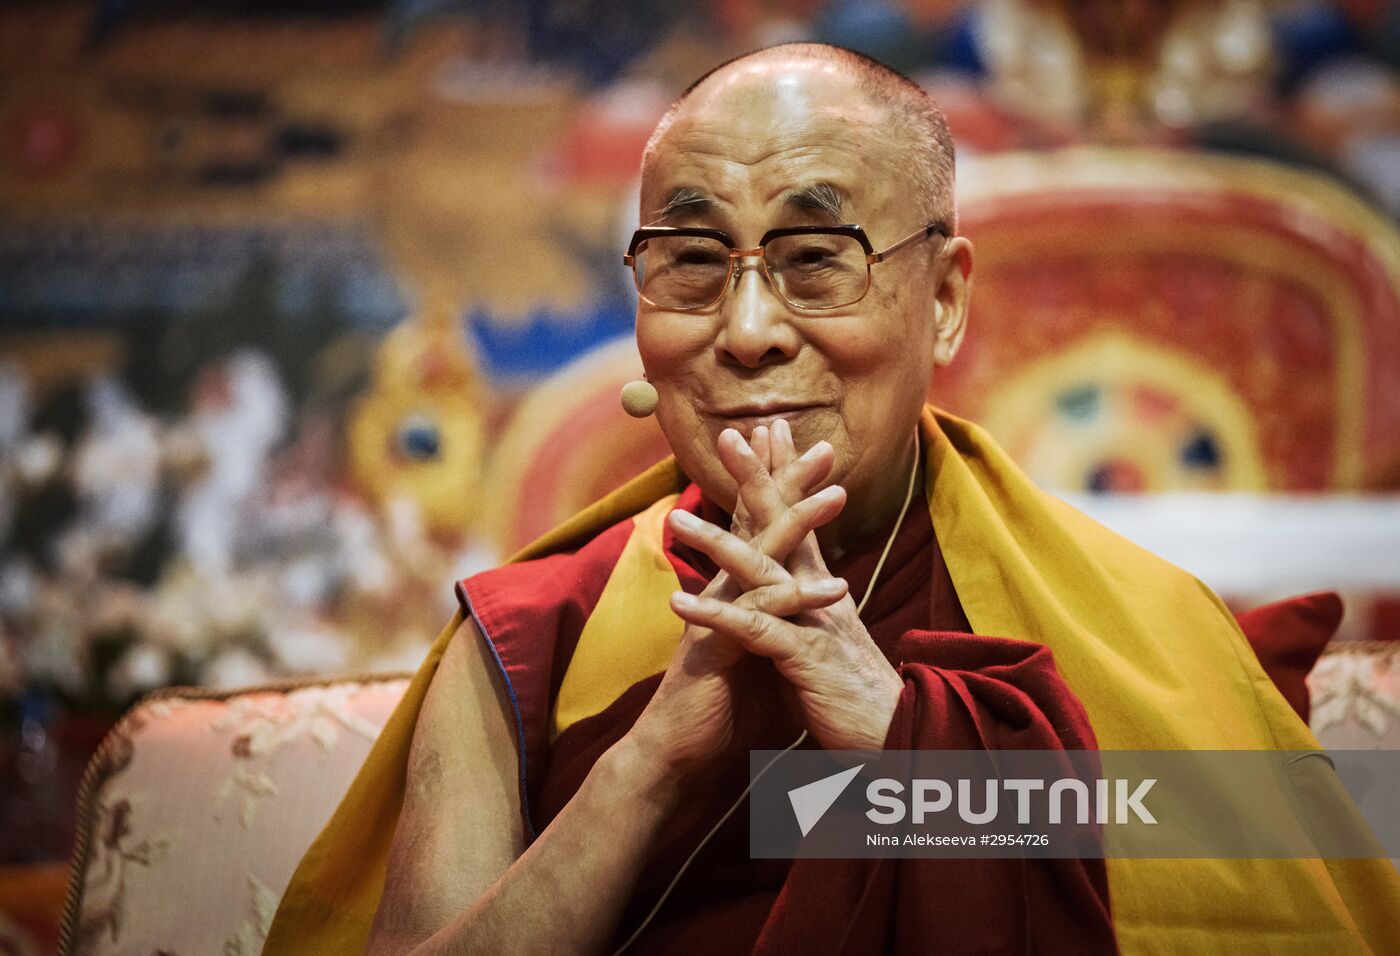 The 14th Dalai Lama gives lecture in Riga